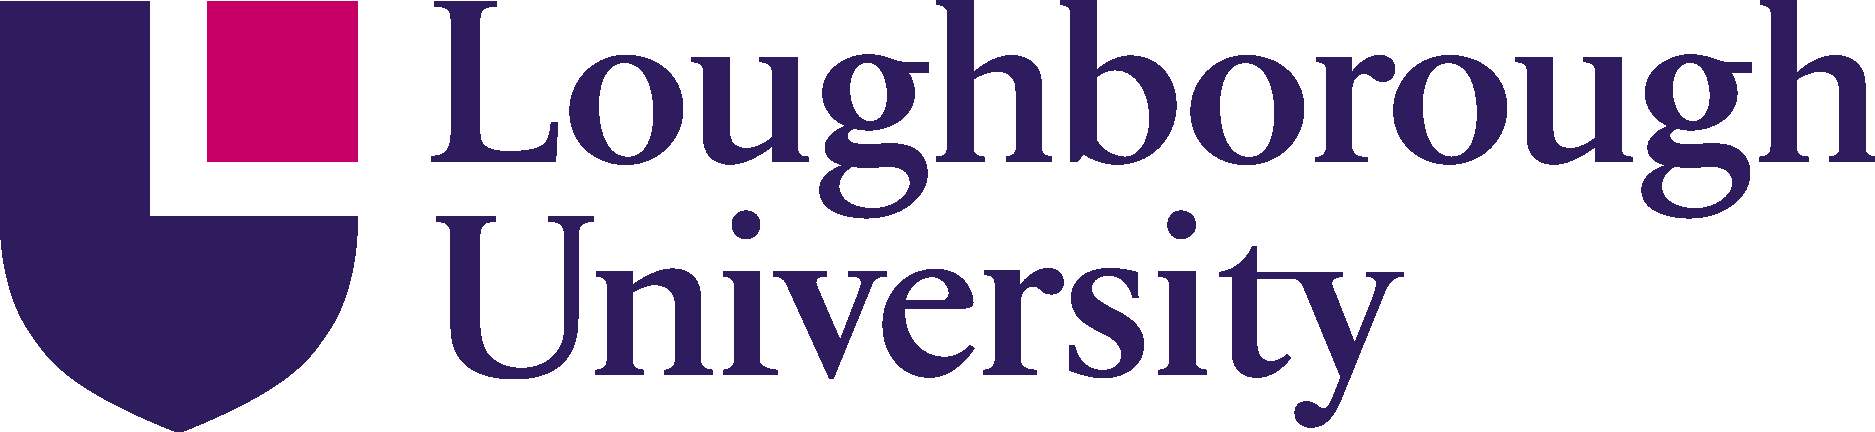 Loughborough University Logo Vector